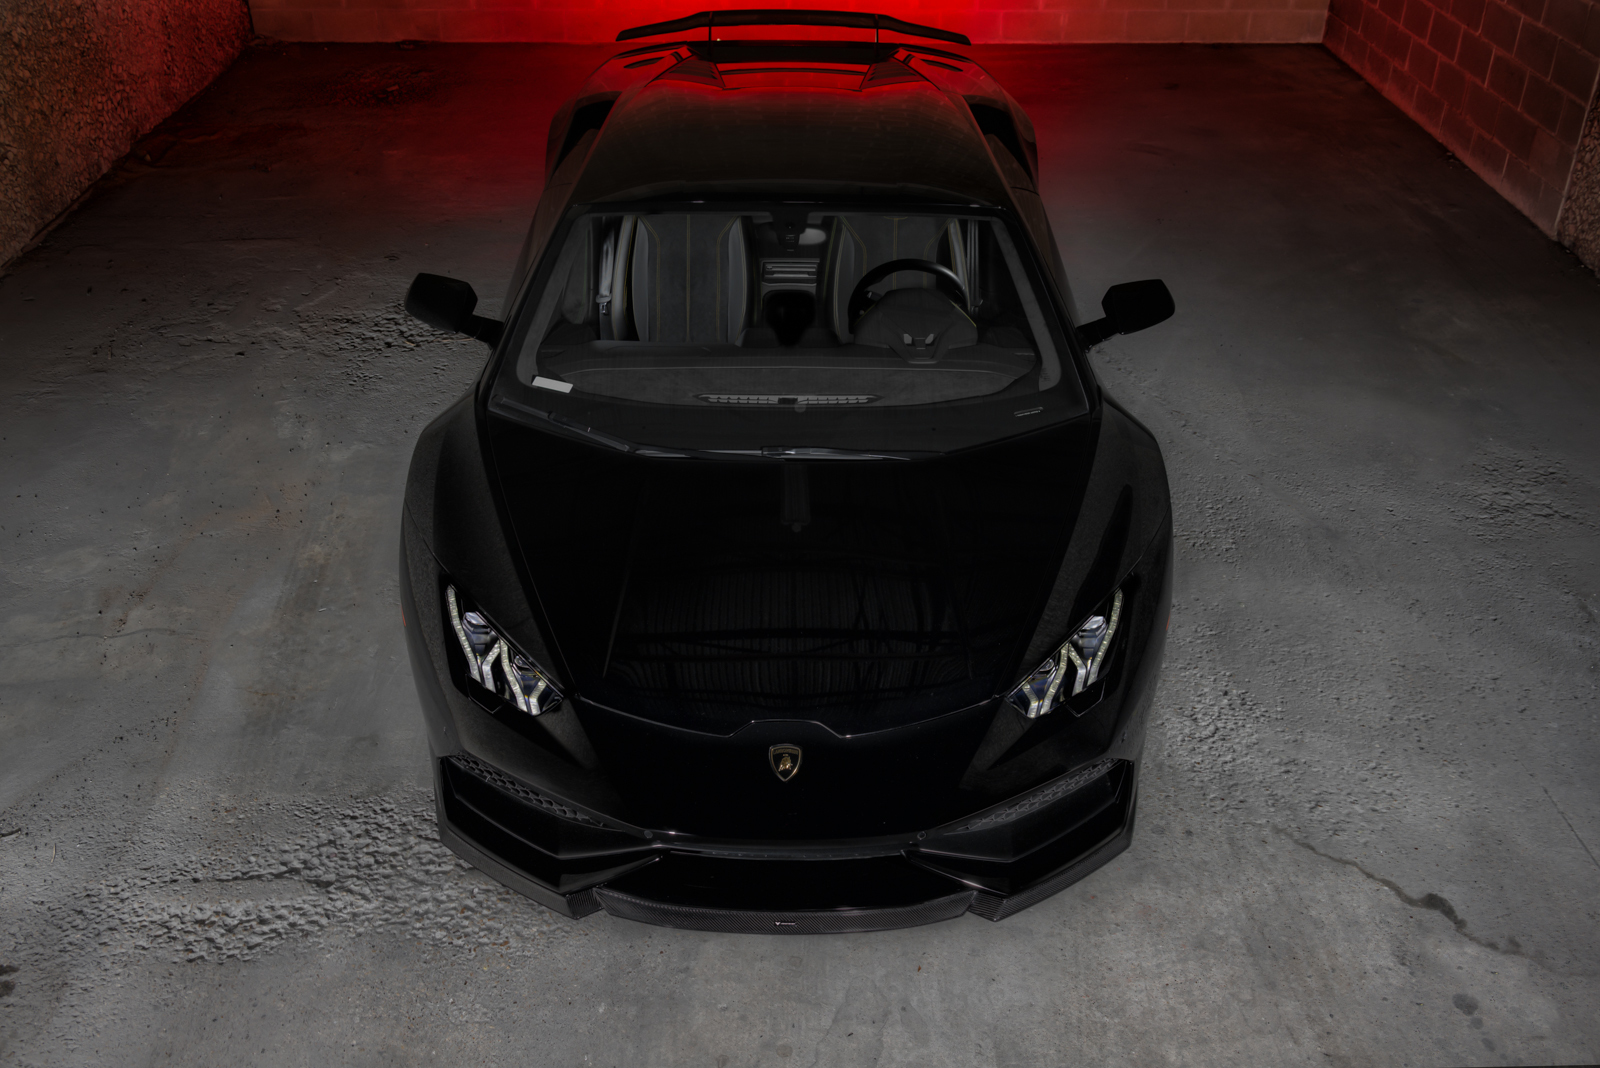 Vorsteiner Nero body kit for Lamborghini Huracan Verona new style